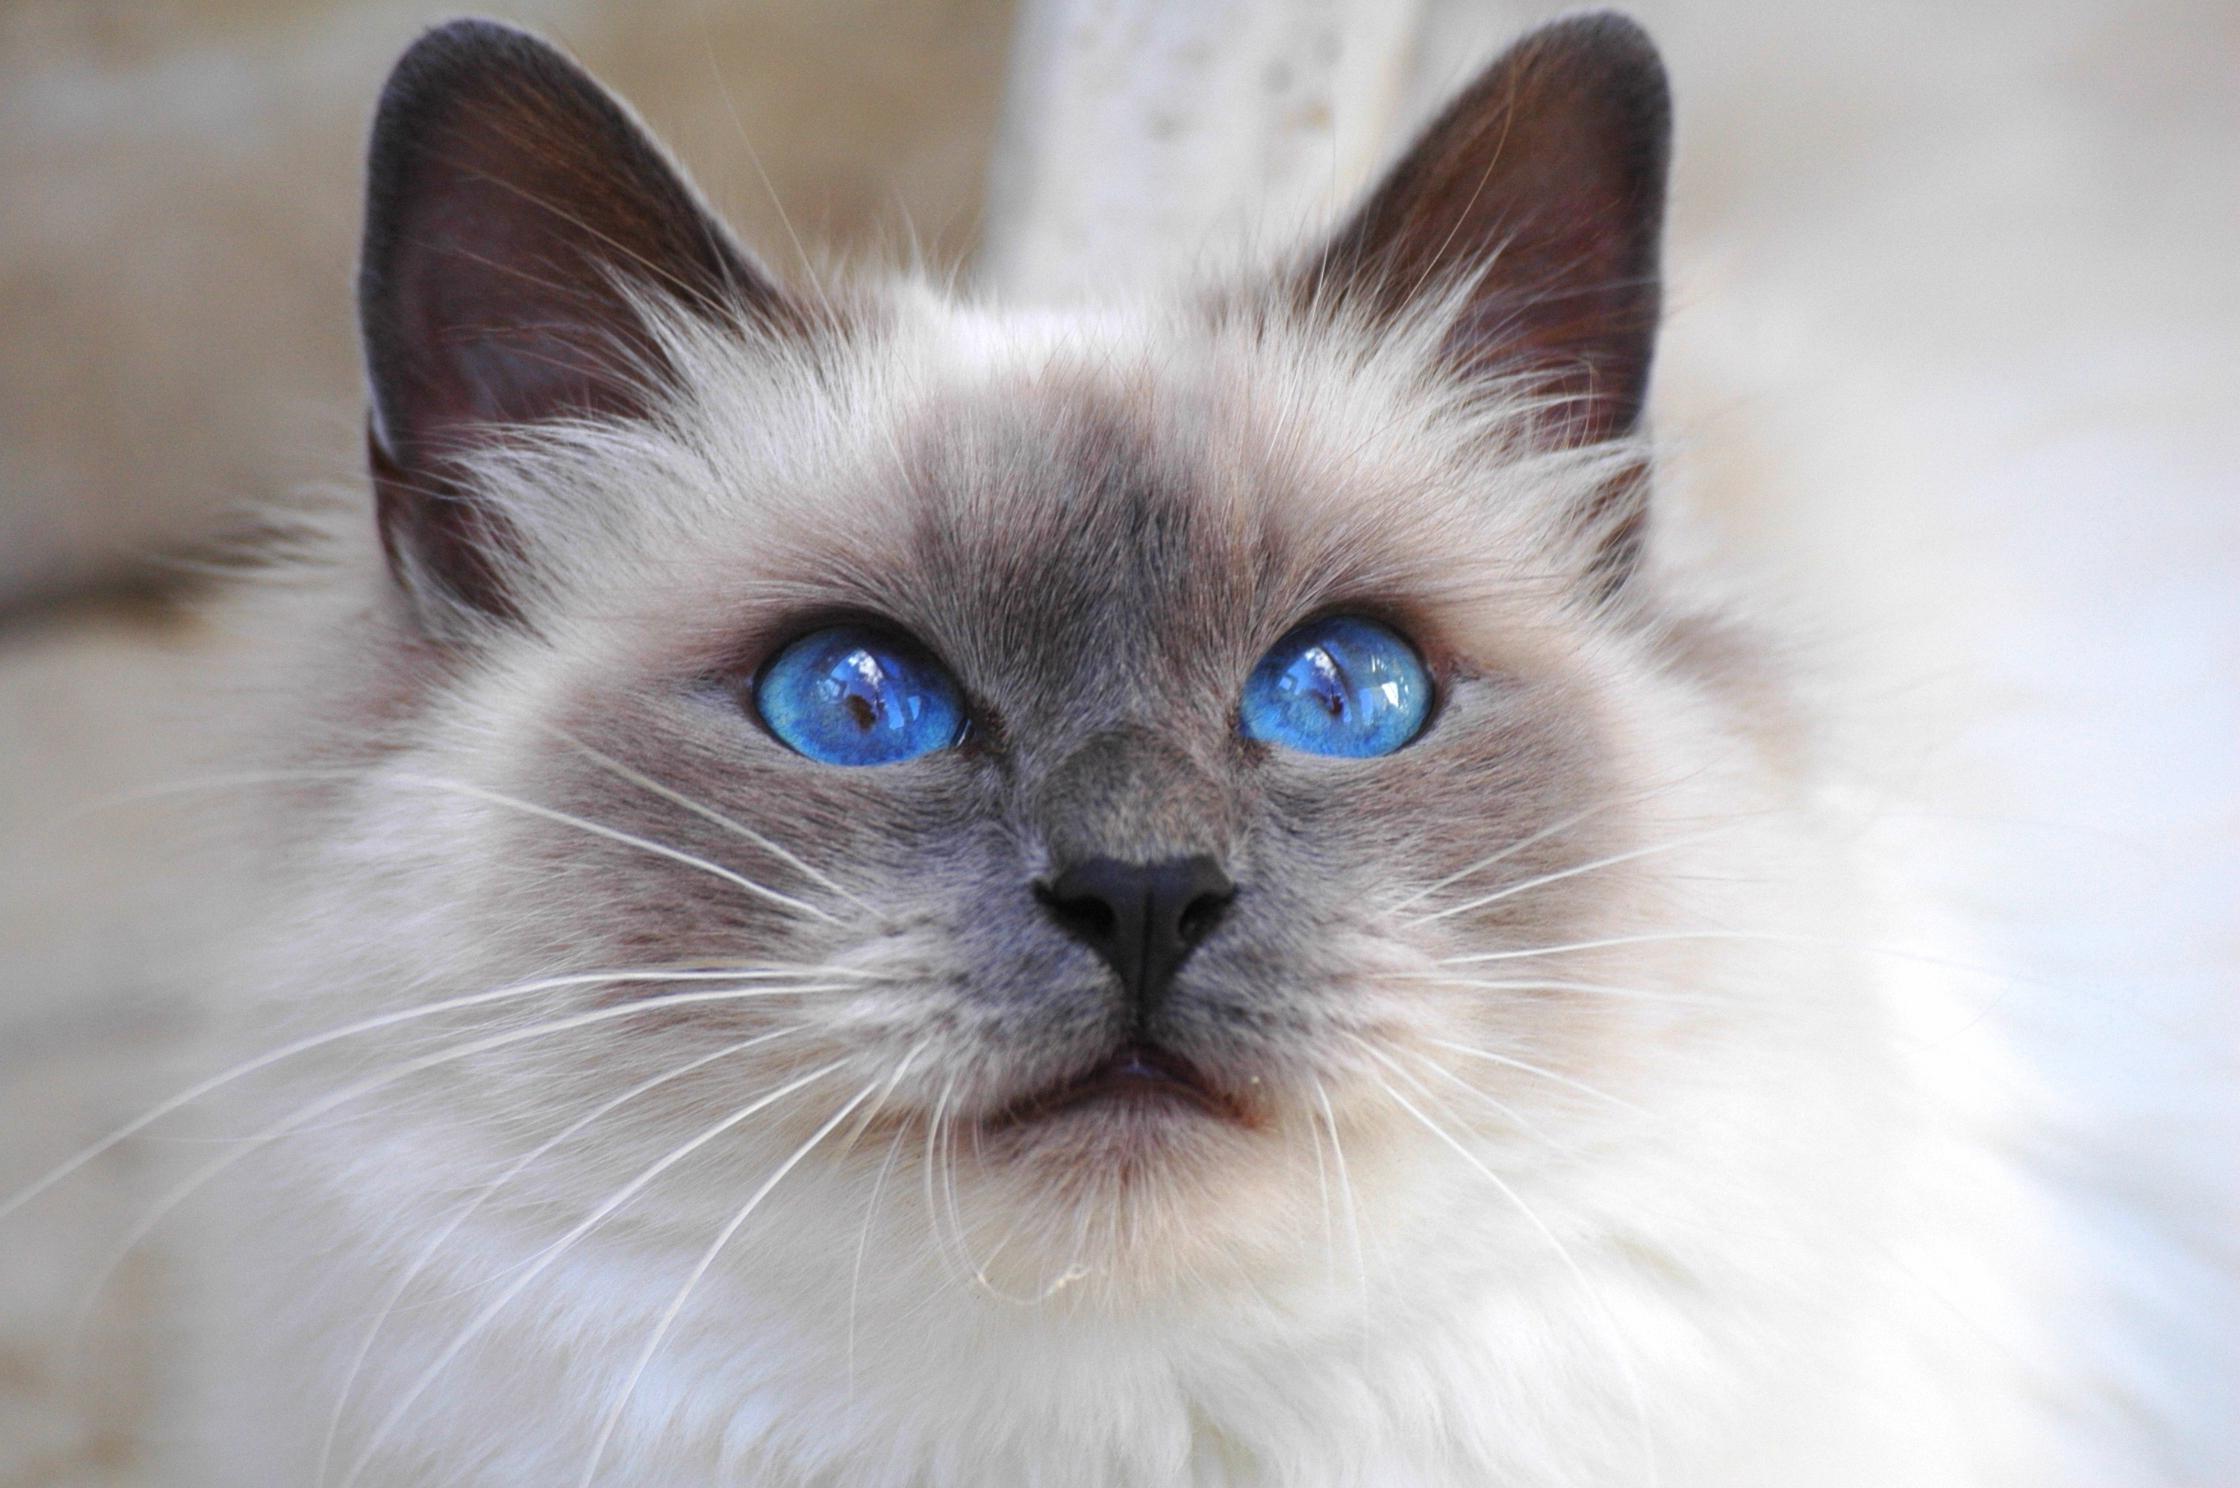 Windows Backgrounds cats, animal, cat, blue eyes, eye, face, fluffy, gray